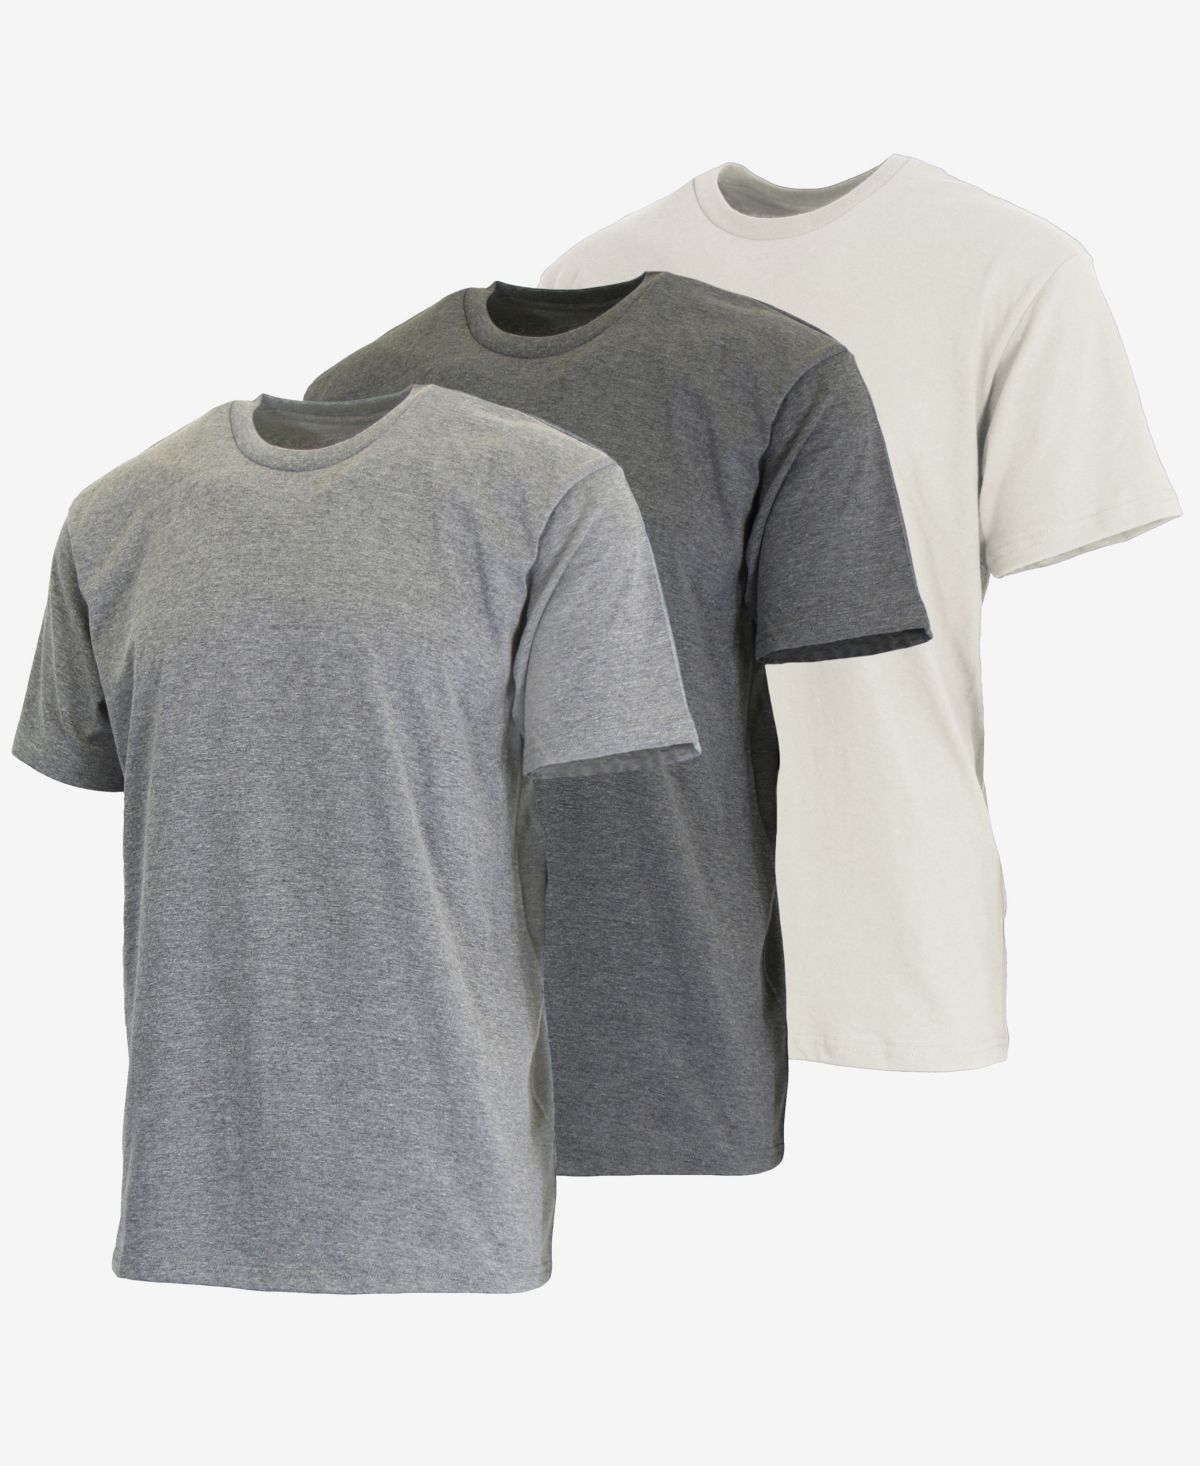 Men's Short Sleeve Crew Neck Classic T-shirt, Pack of 3 - Navy, Royal, White